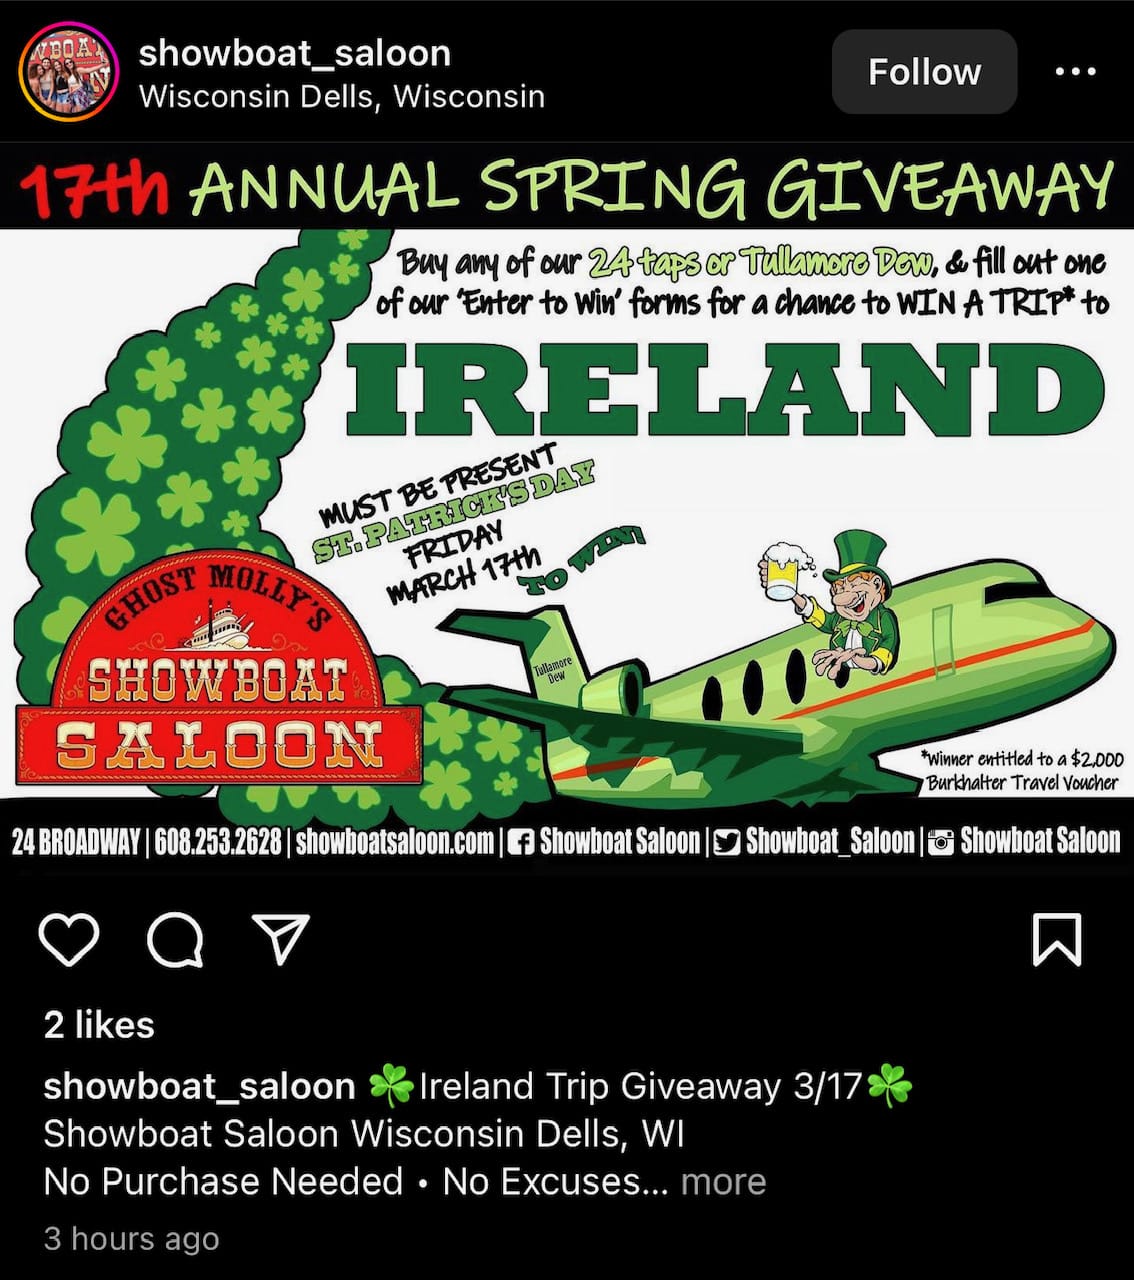 win a trip to Ireland